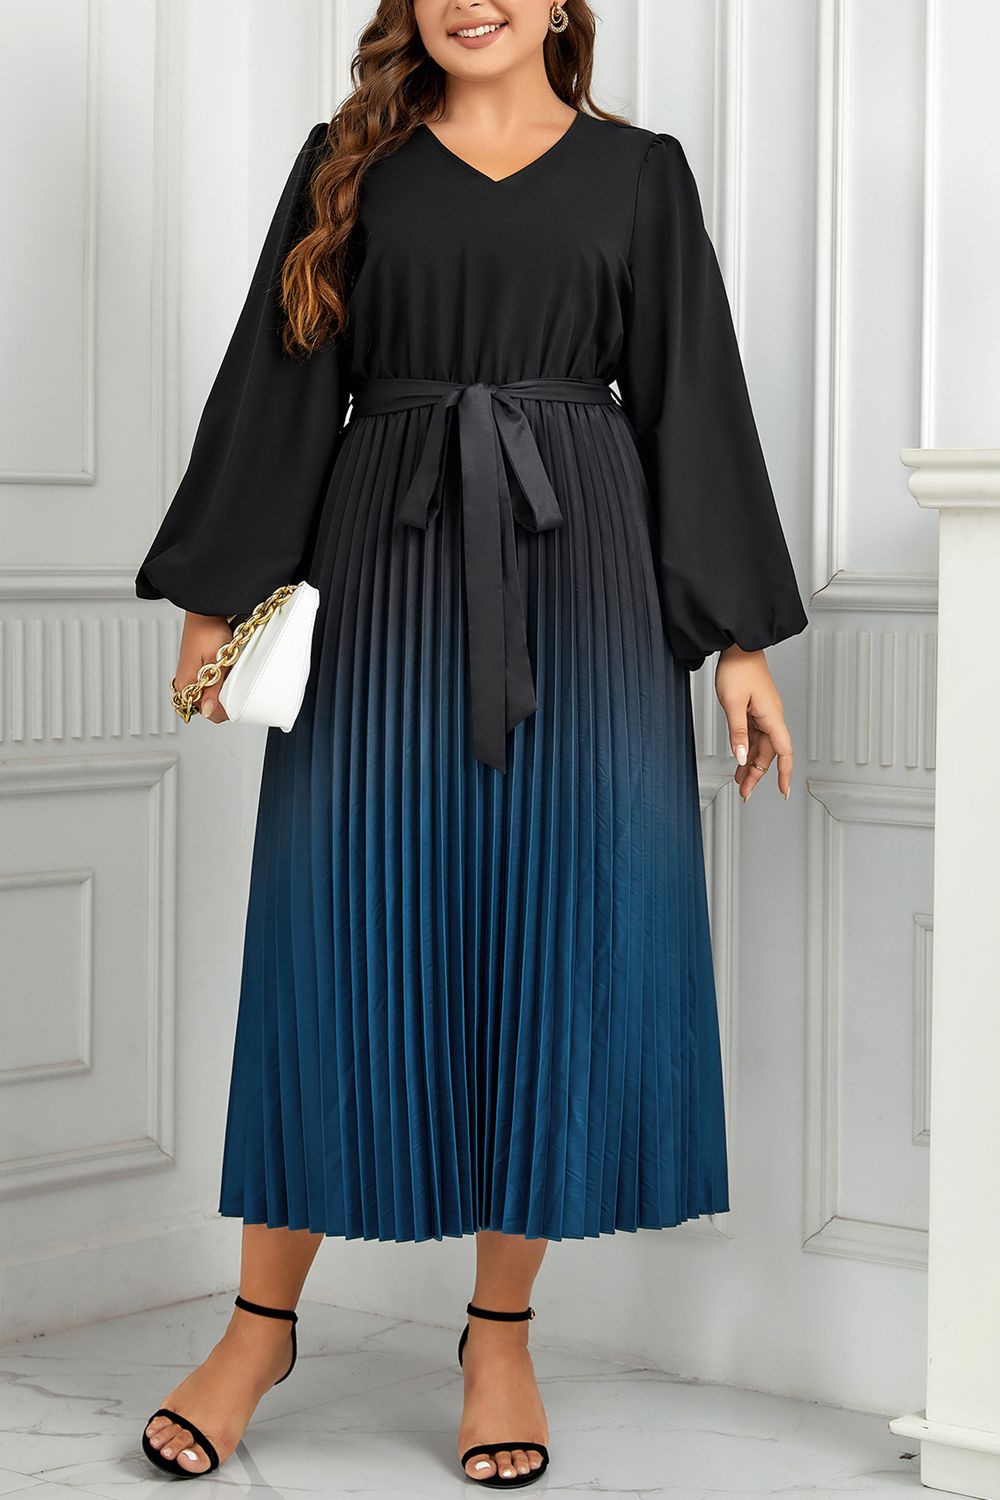 Meliza's Plus Size V-Neck Long Sleeve Pleated Tie Waist Midi Dress